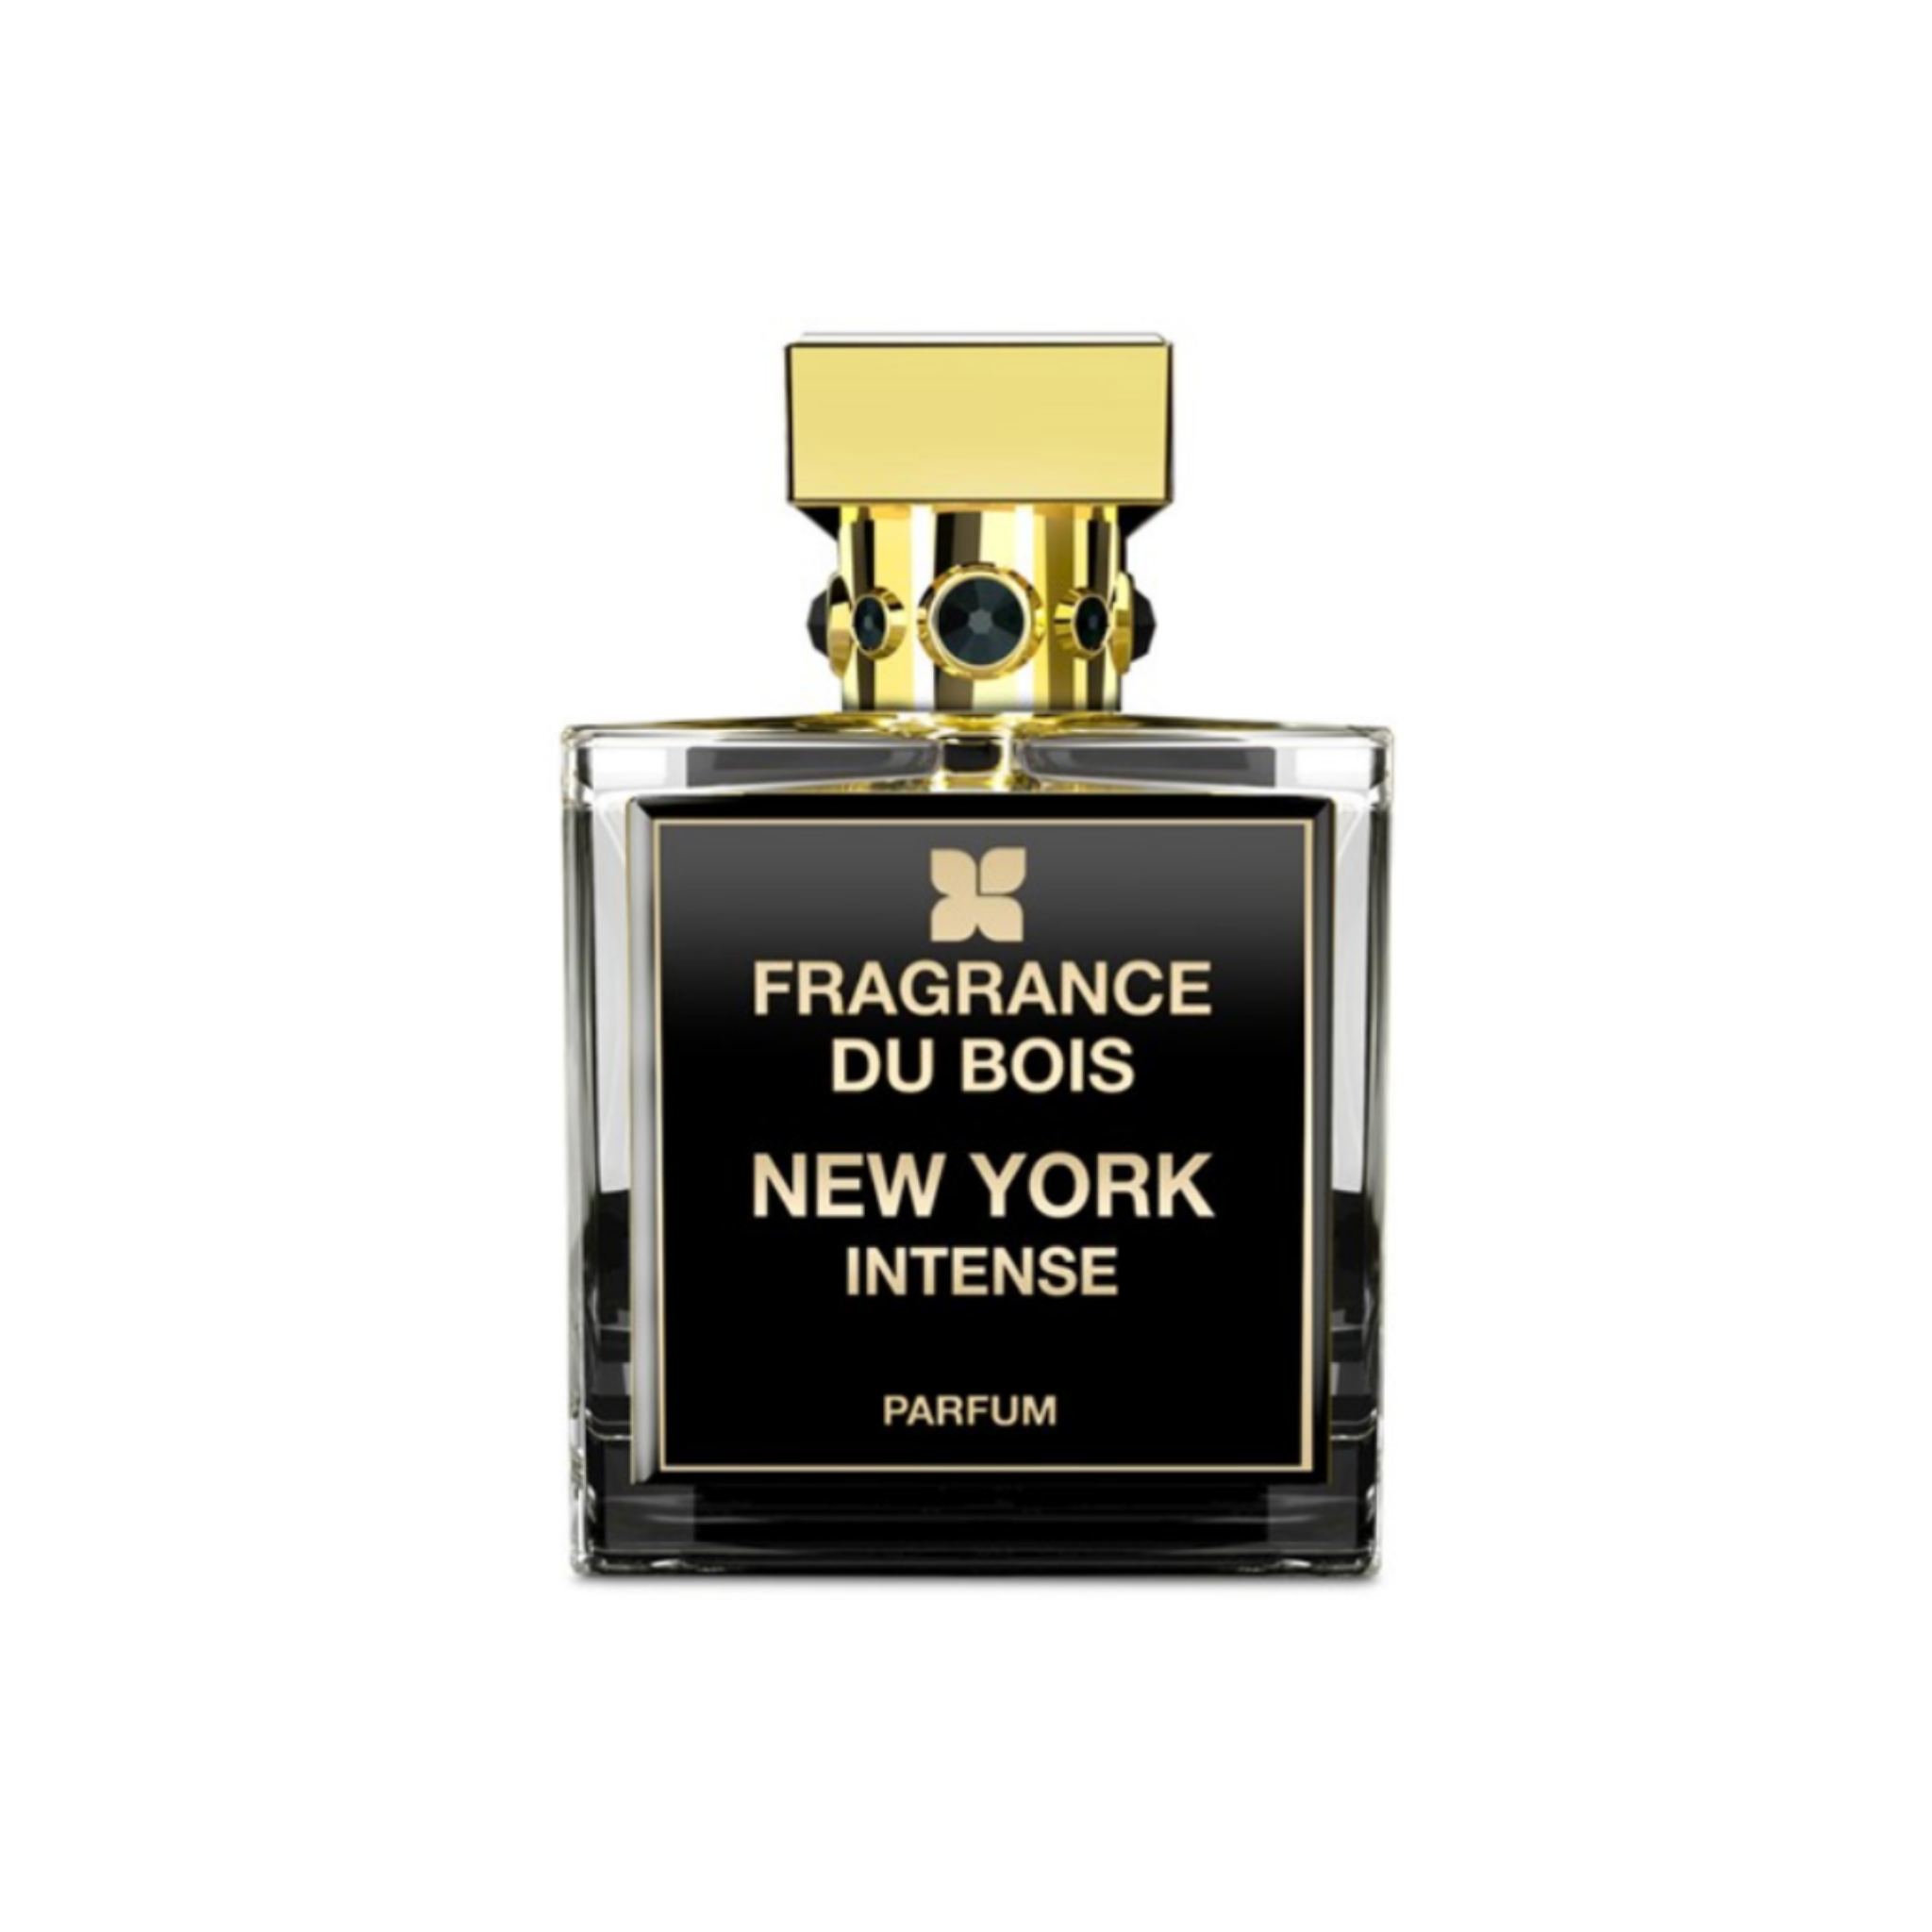 NEW YORK INTENSE Parfum